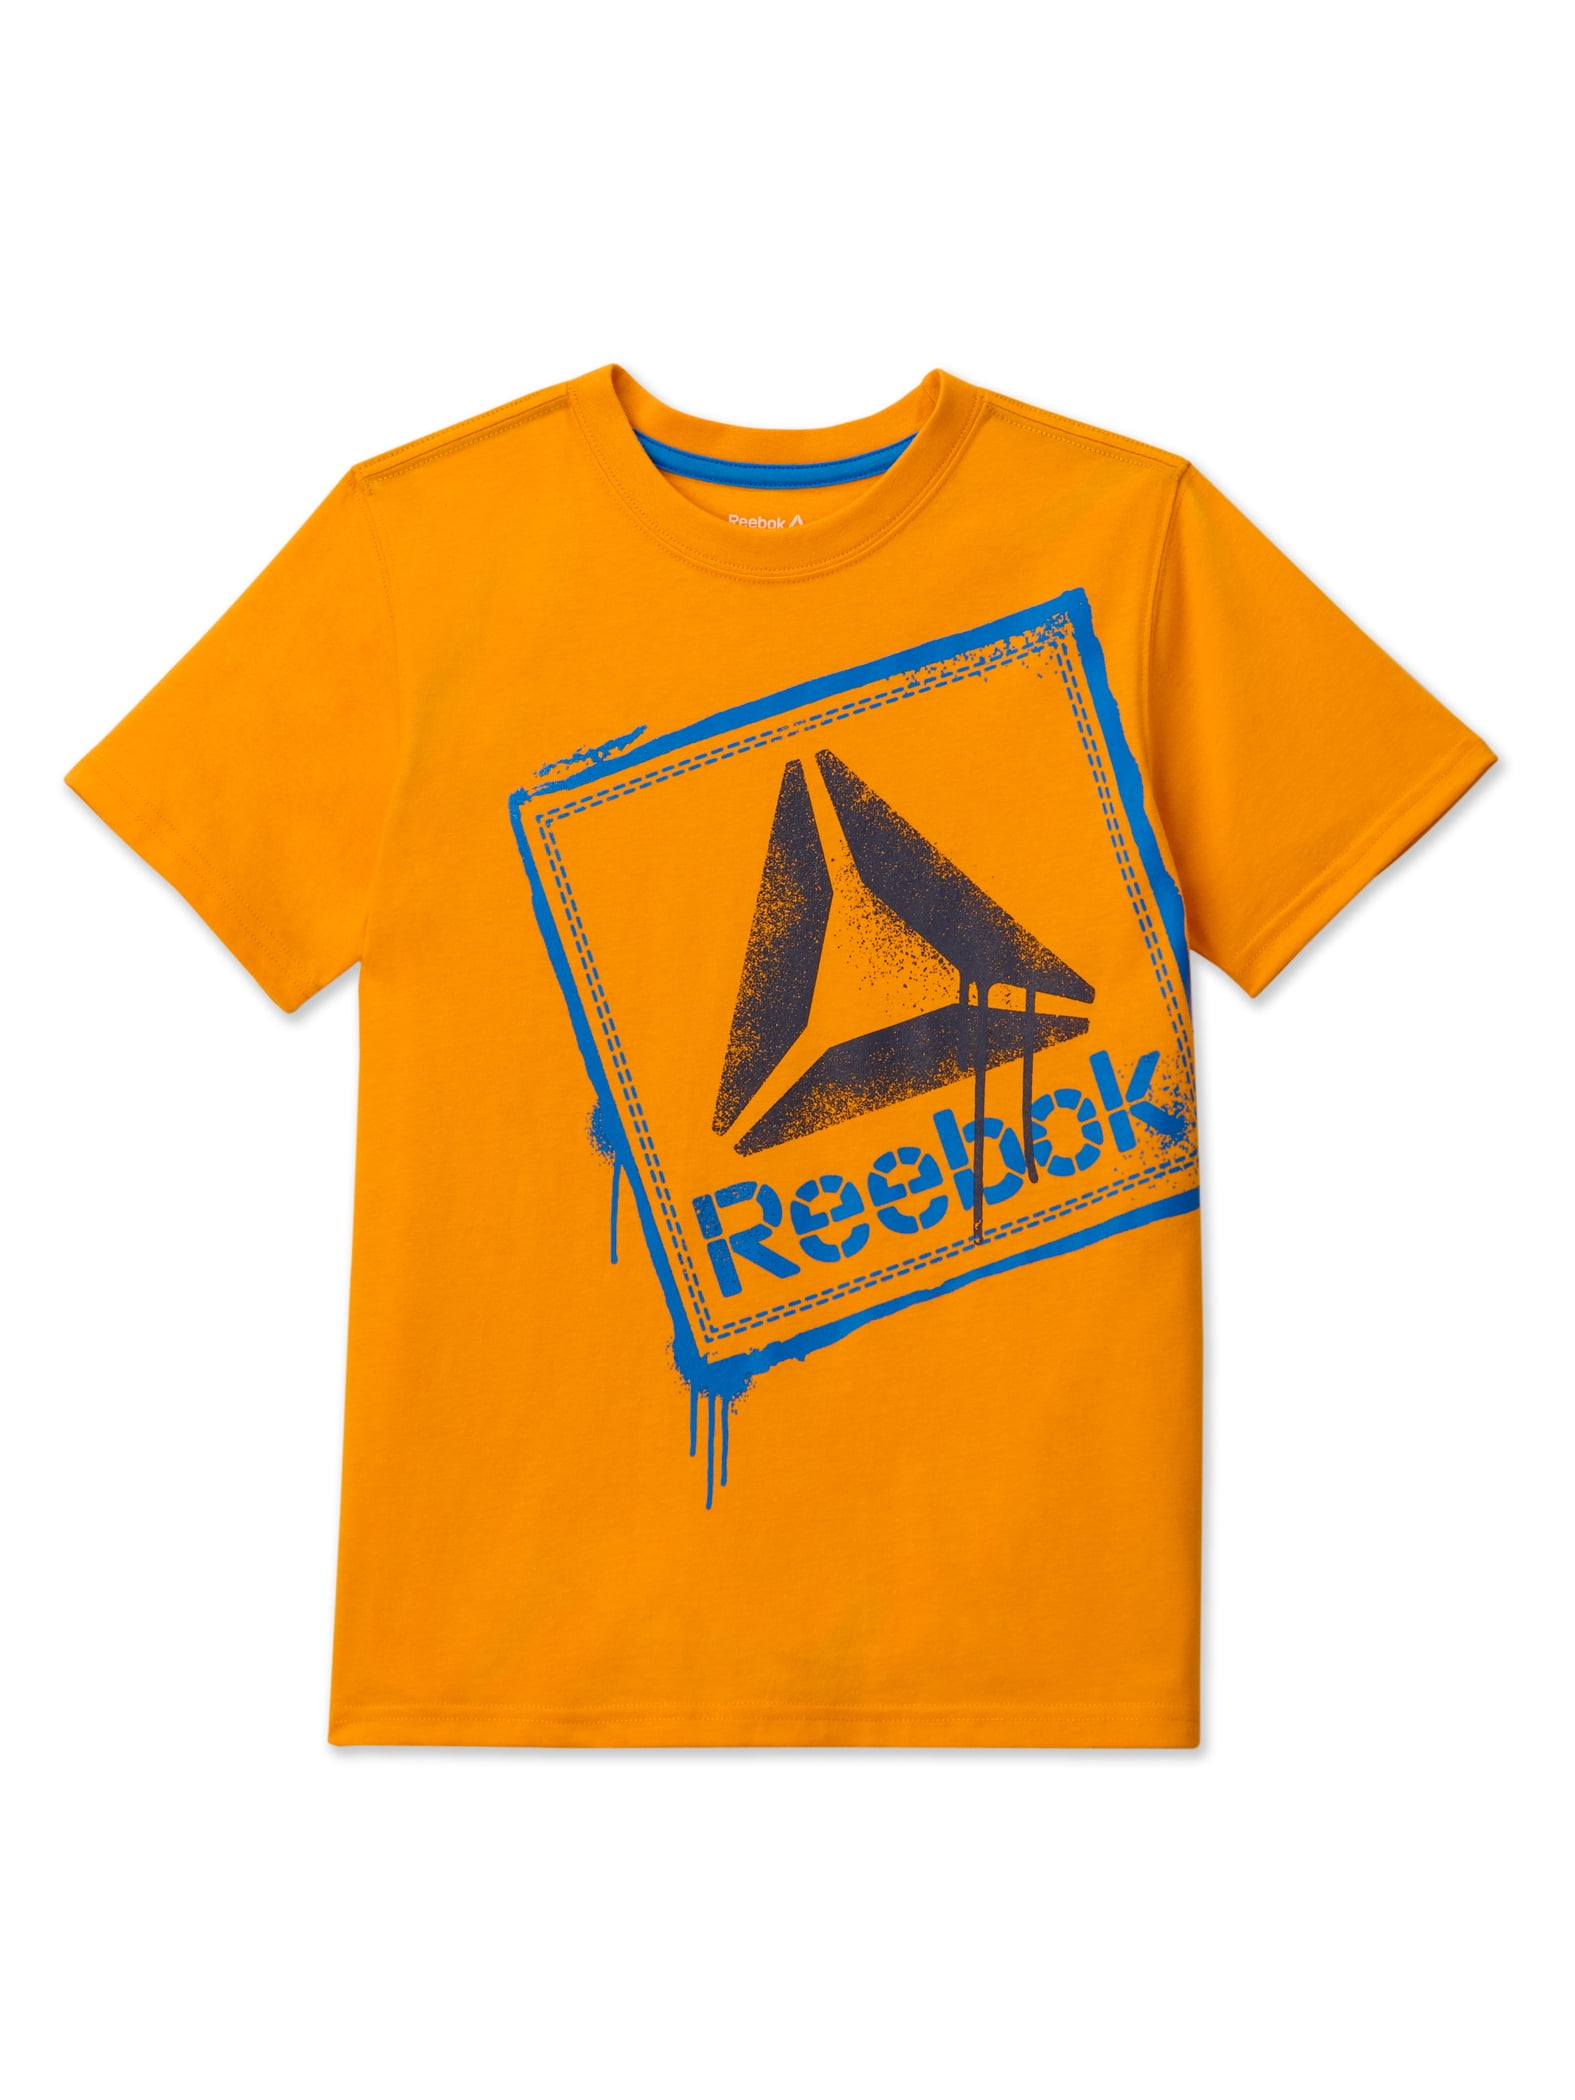 Reebok Boys Logo Graphic Short Sleeve Tee, Sizes 4-18 - Walmart.com